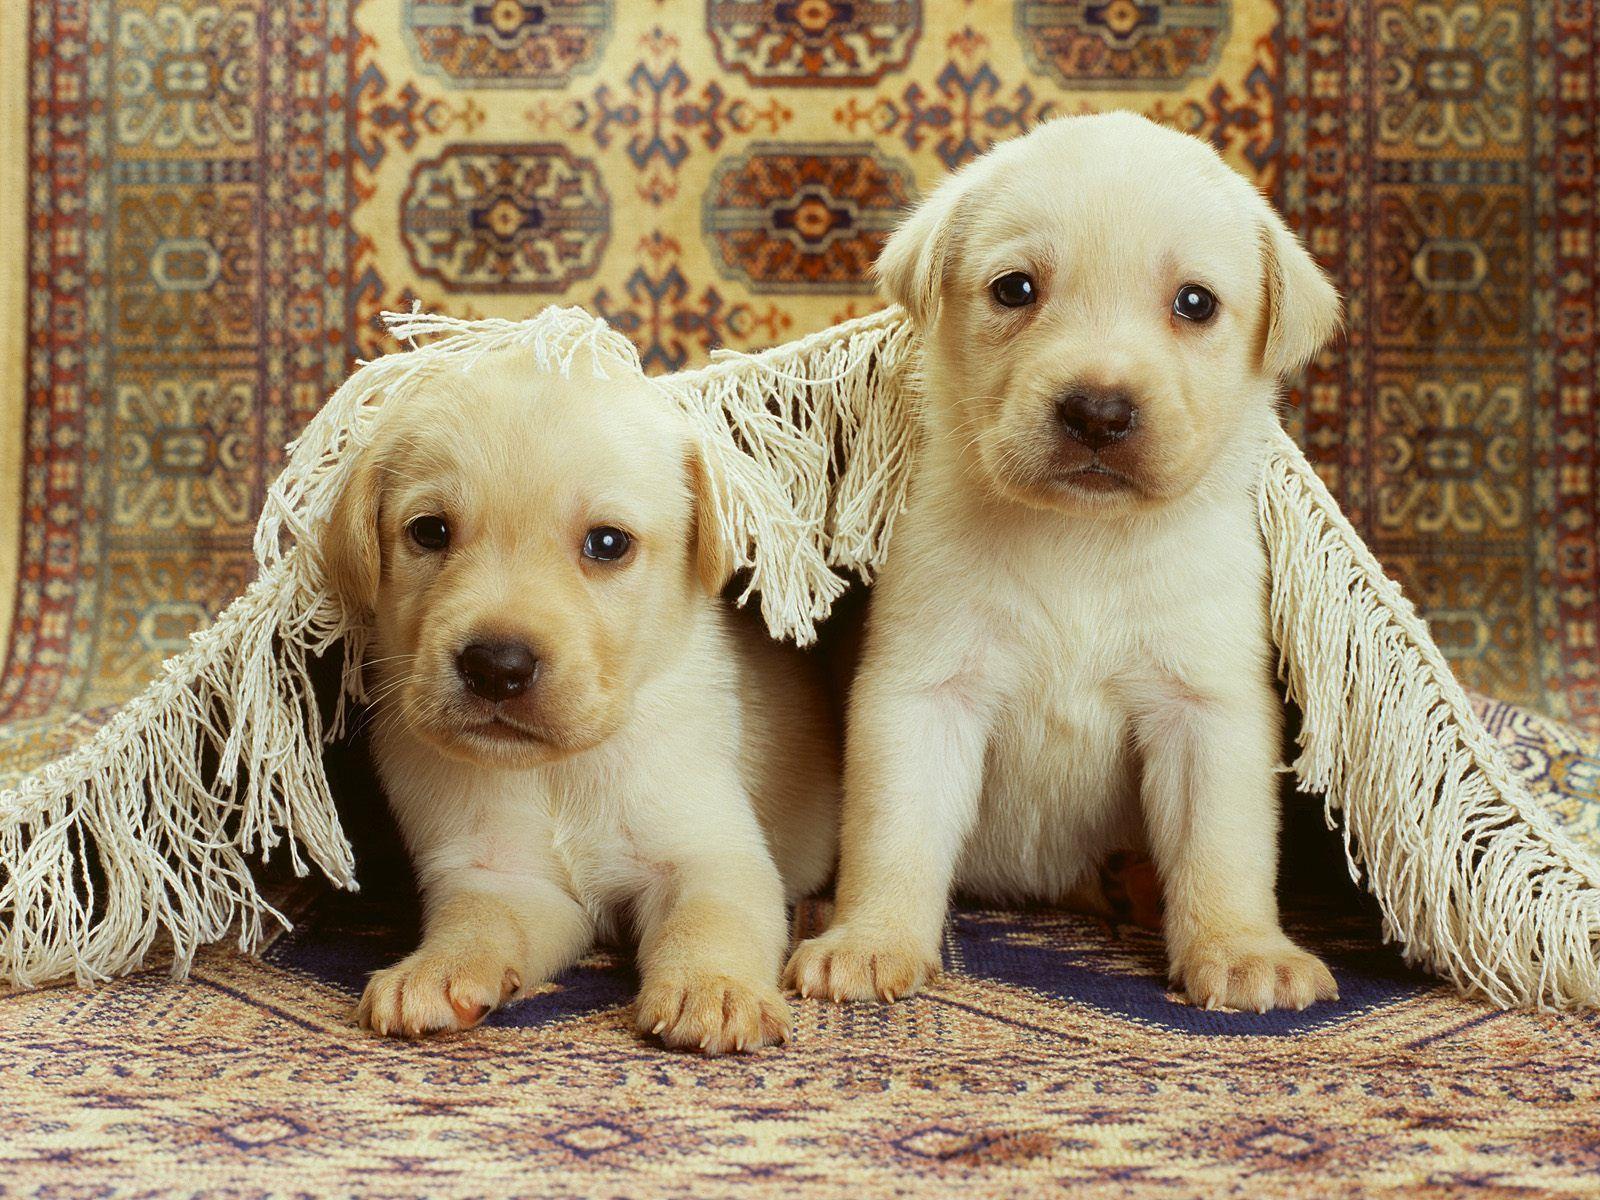 Beautiful Image. Beautiful Dogs Fashions For All 5. Animal Love